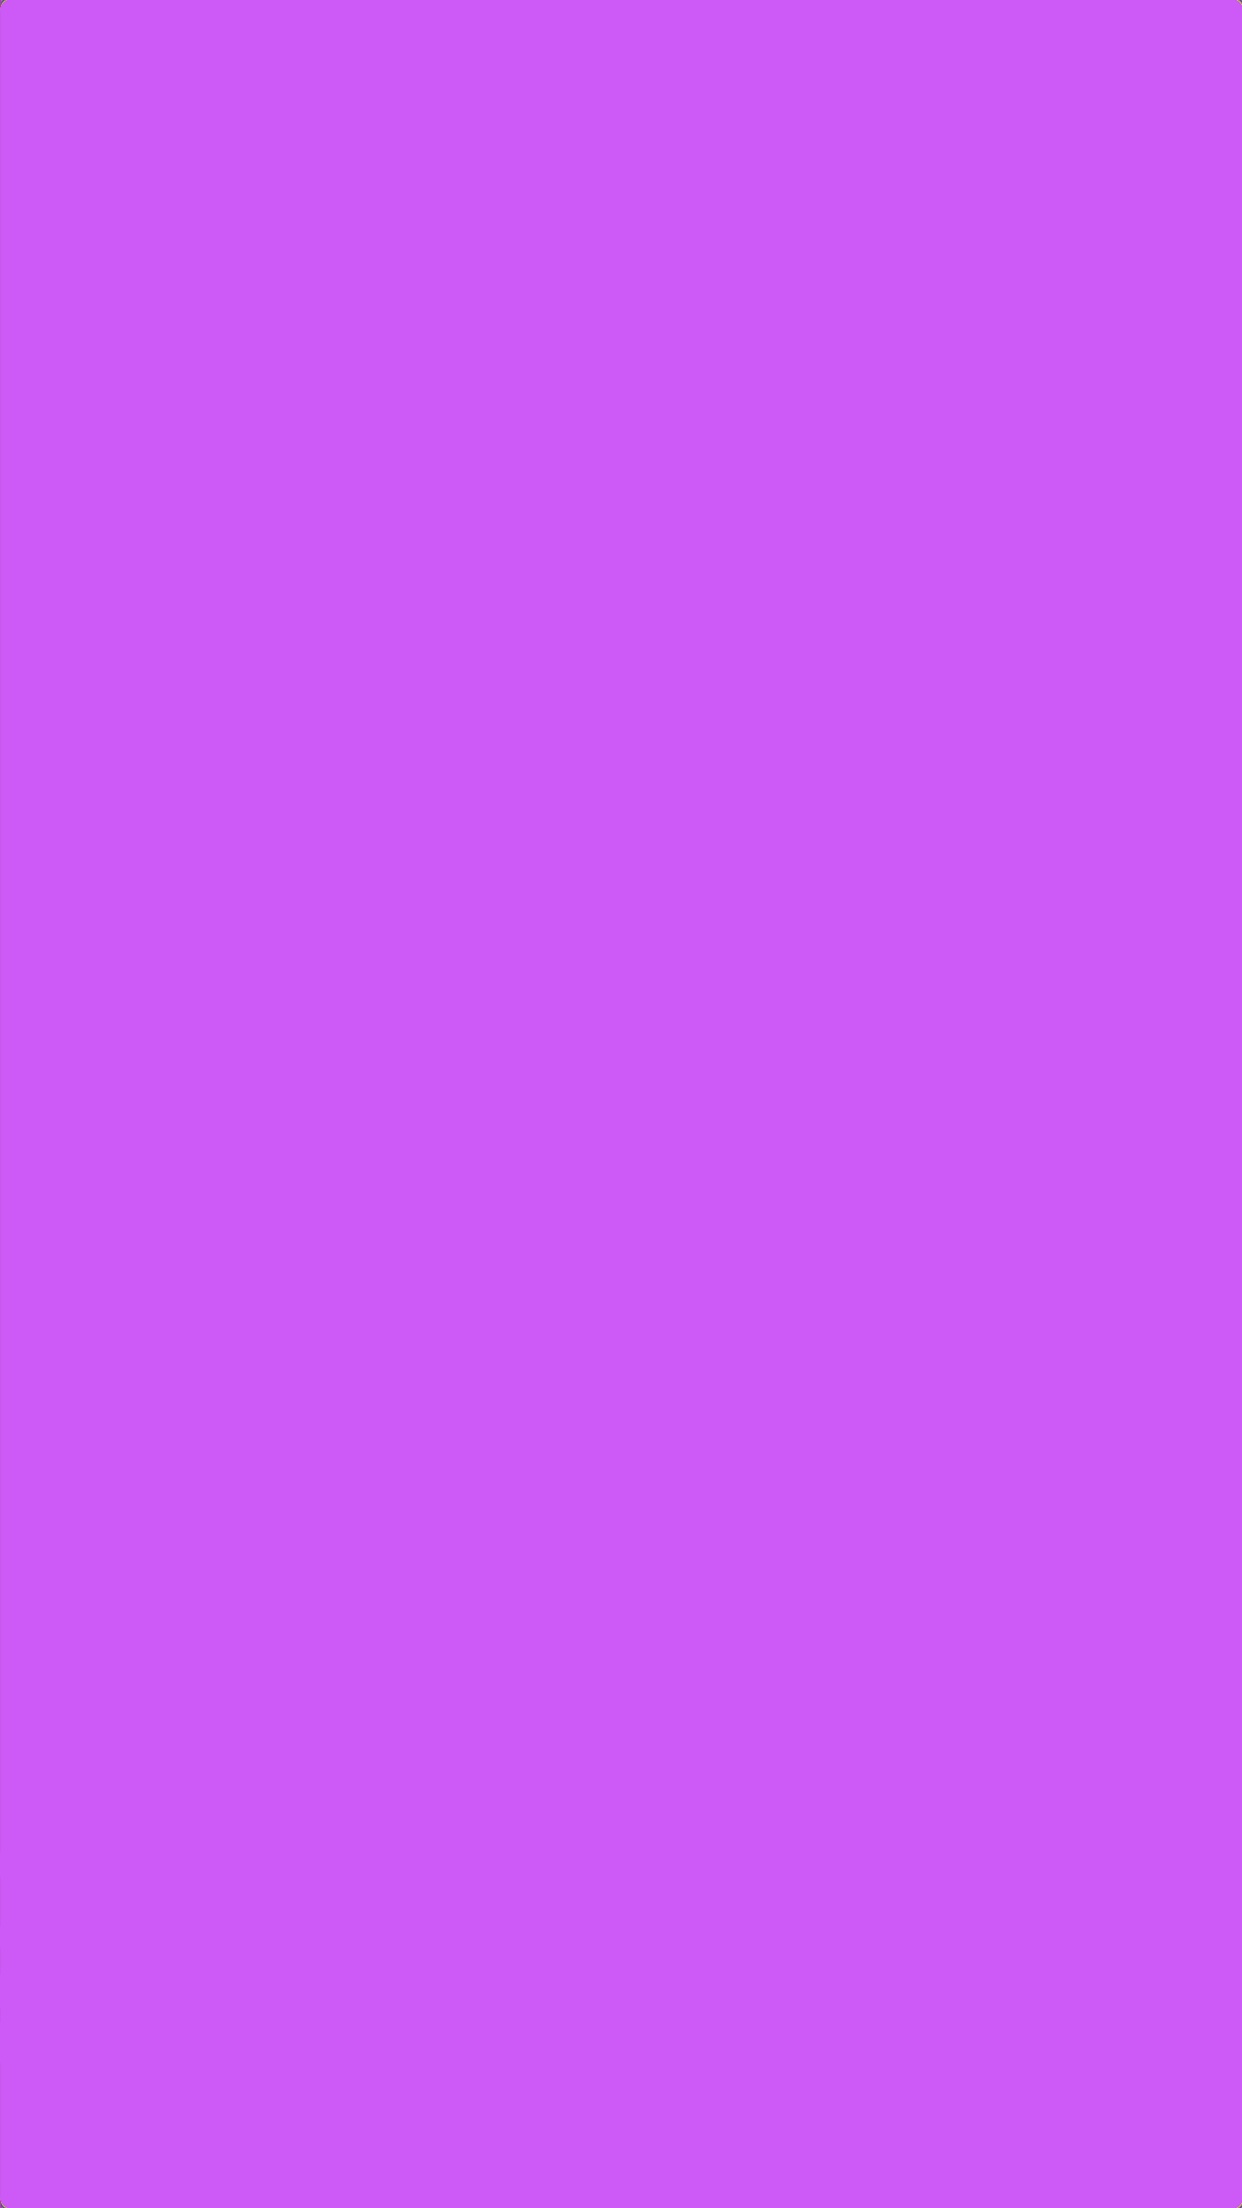 iphone farb wallpaper,violett,rosa,blau,lila,lila